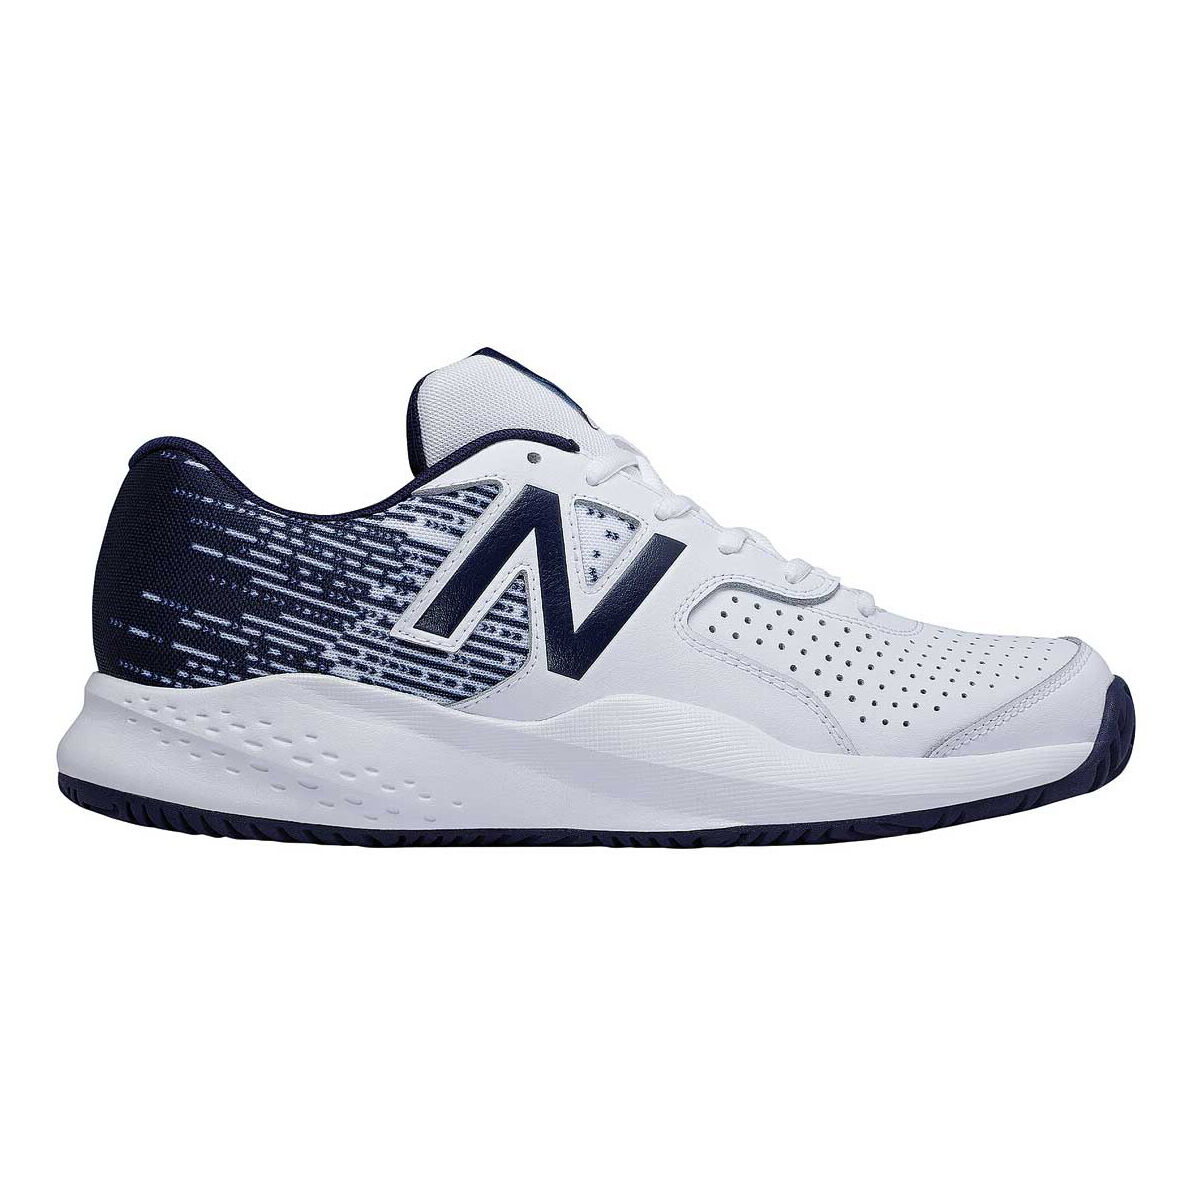 New Balance 696v3 Mens Tennis Shoes 